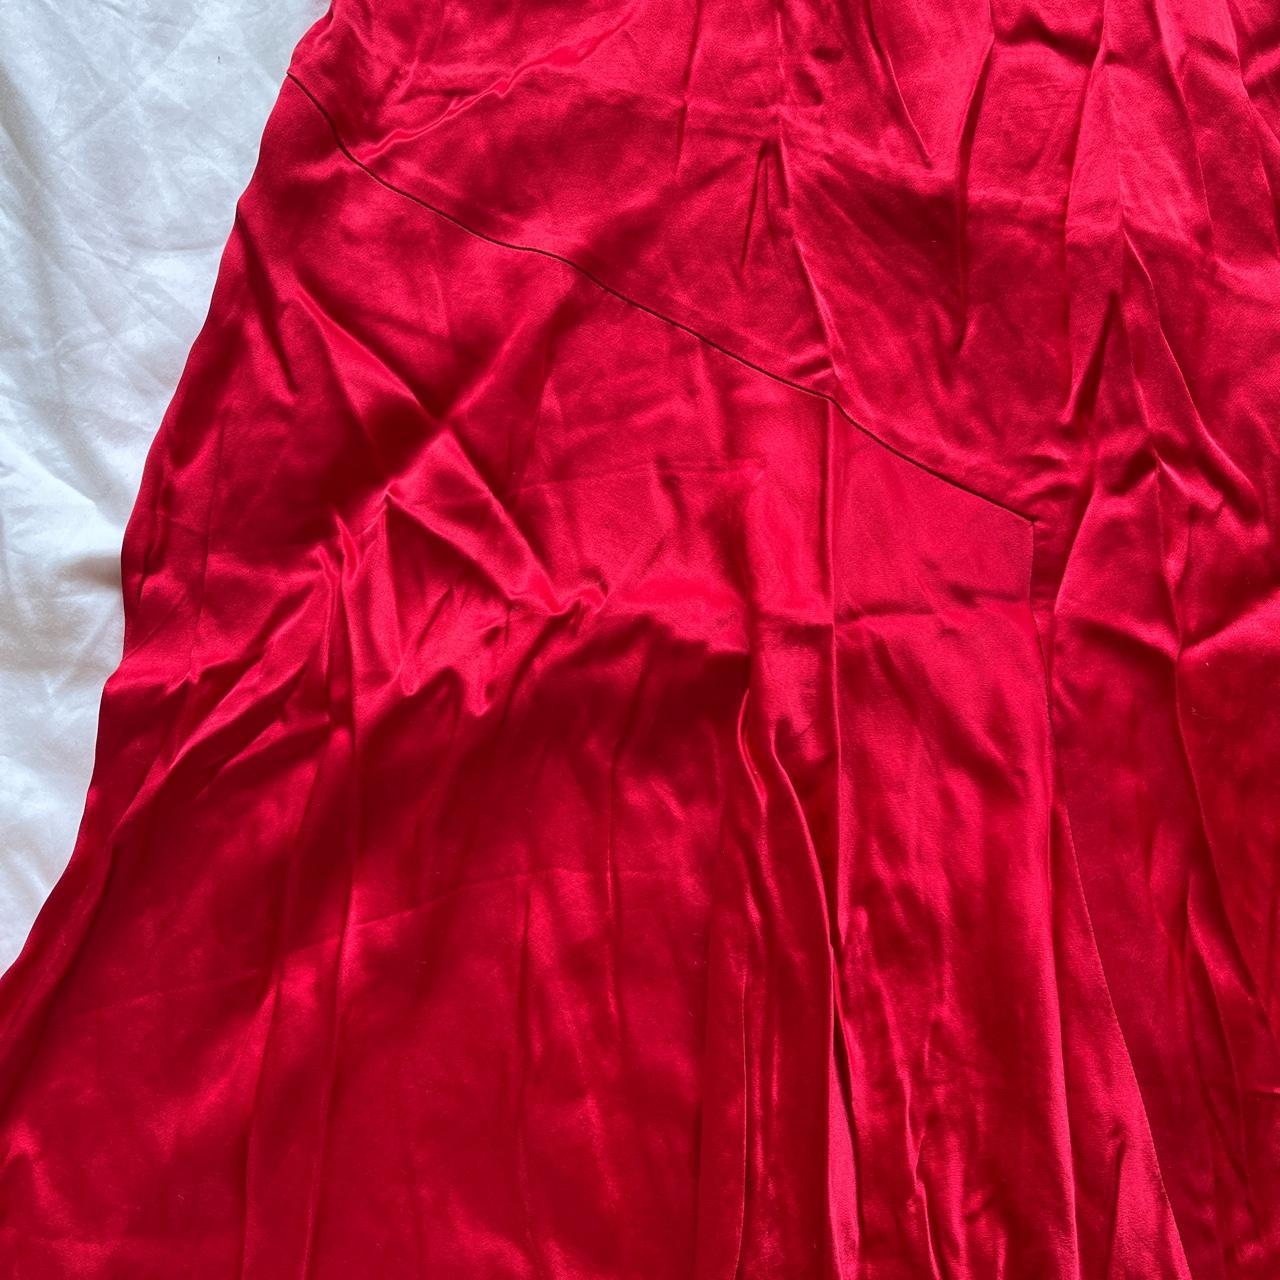 Red satin bias cut asymmetrical hemmed skirt. Mid... - Depop